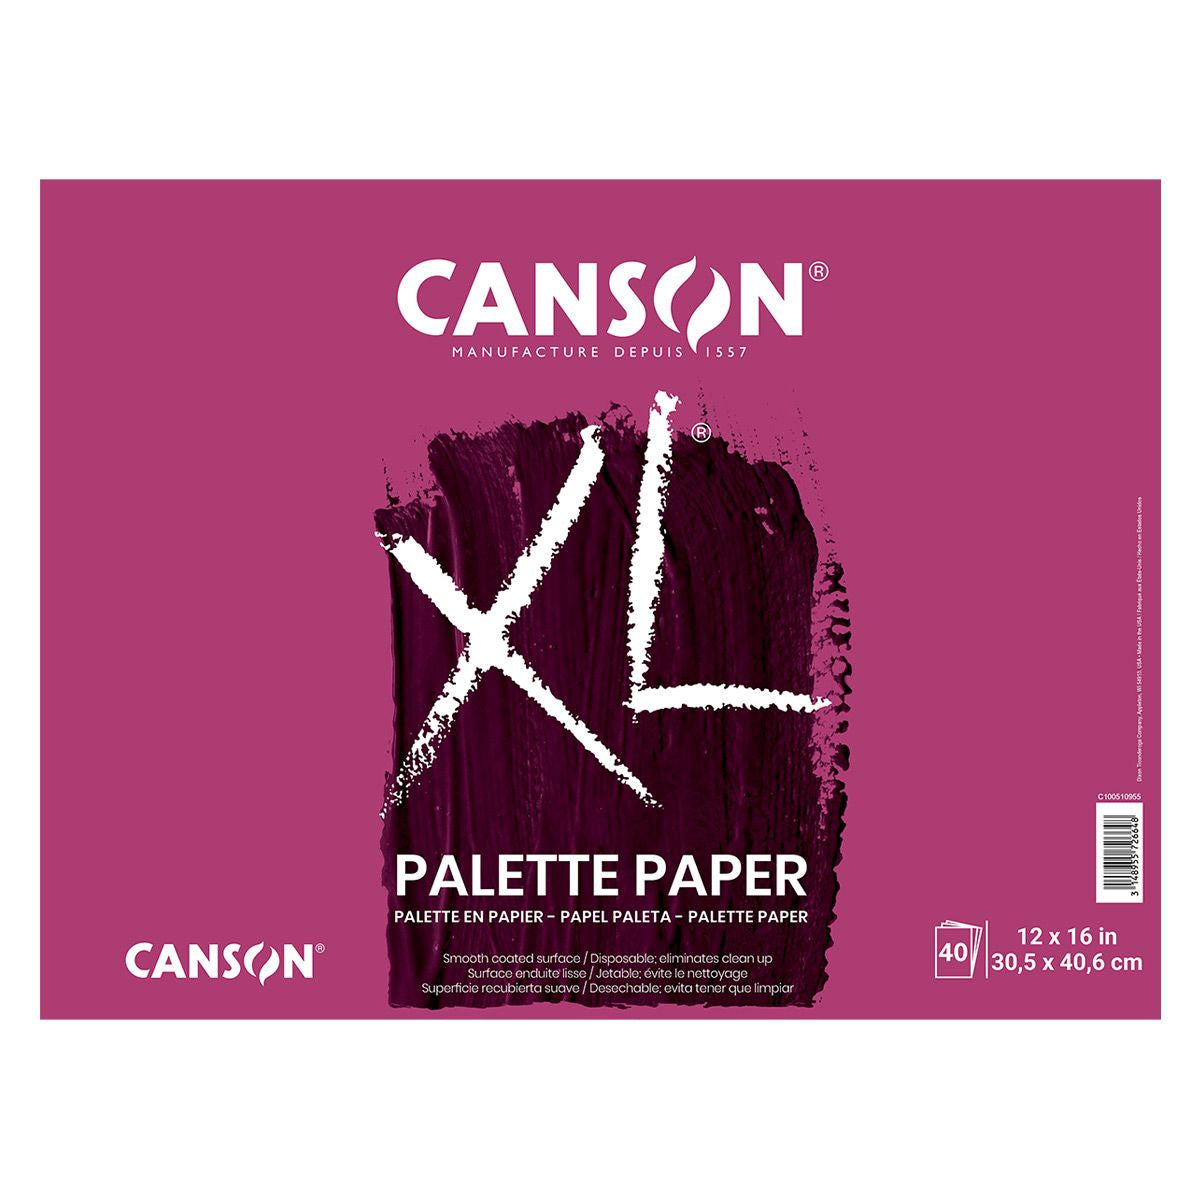 CANSON 12X16 PALETTE PAPER